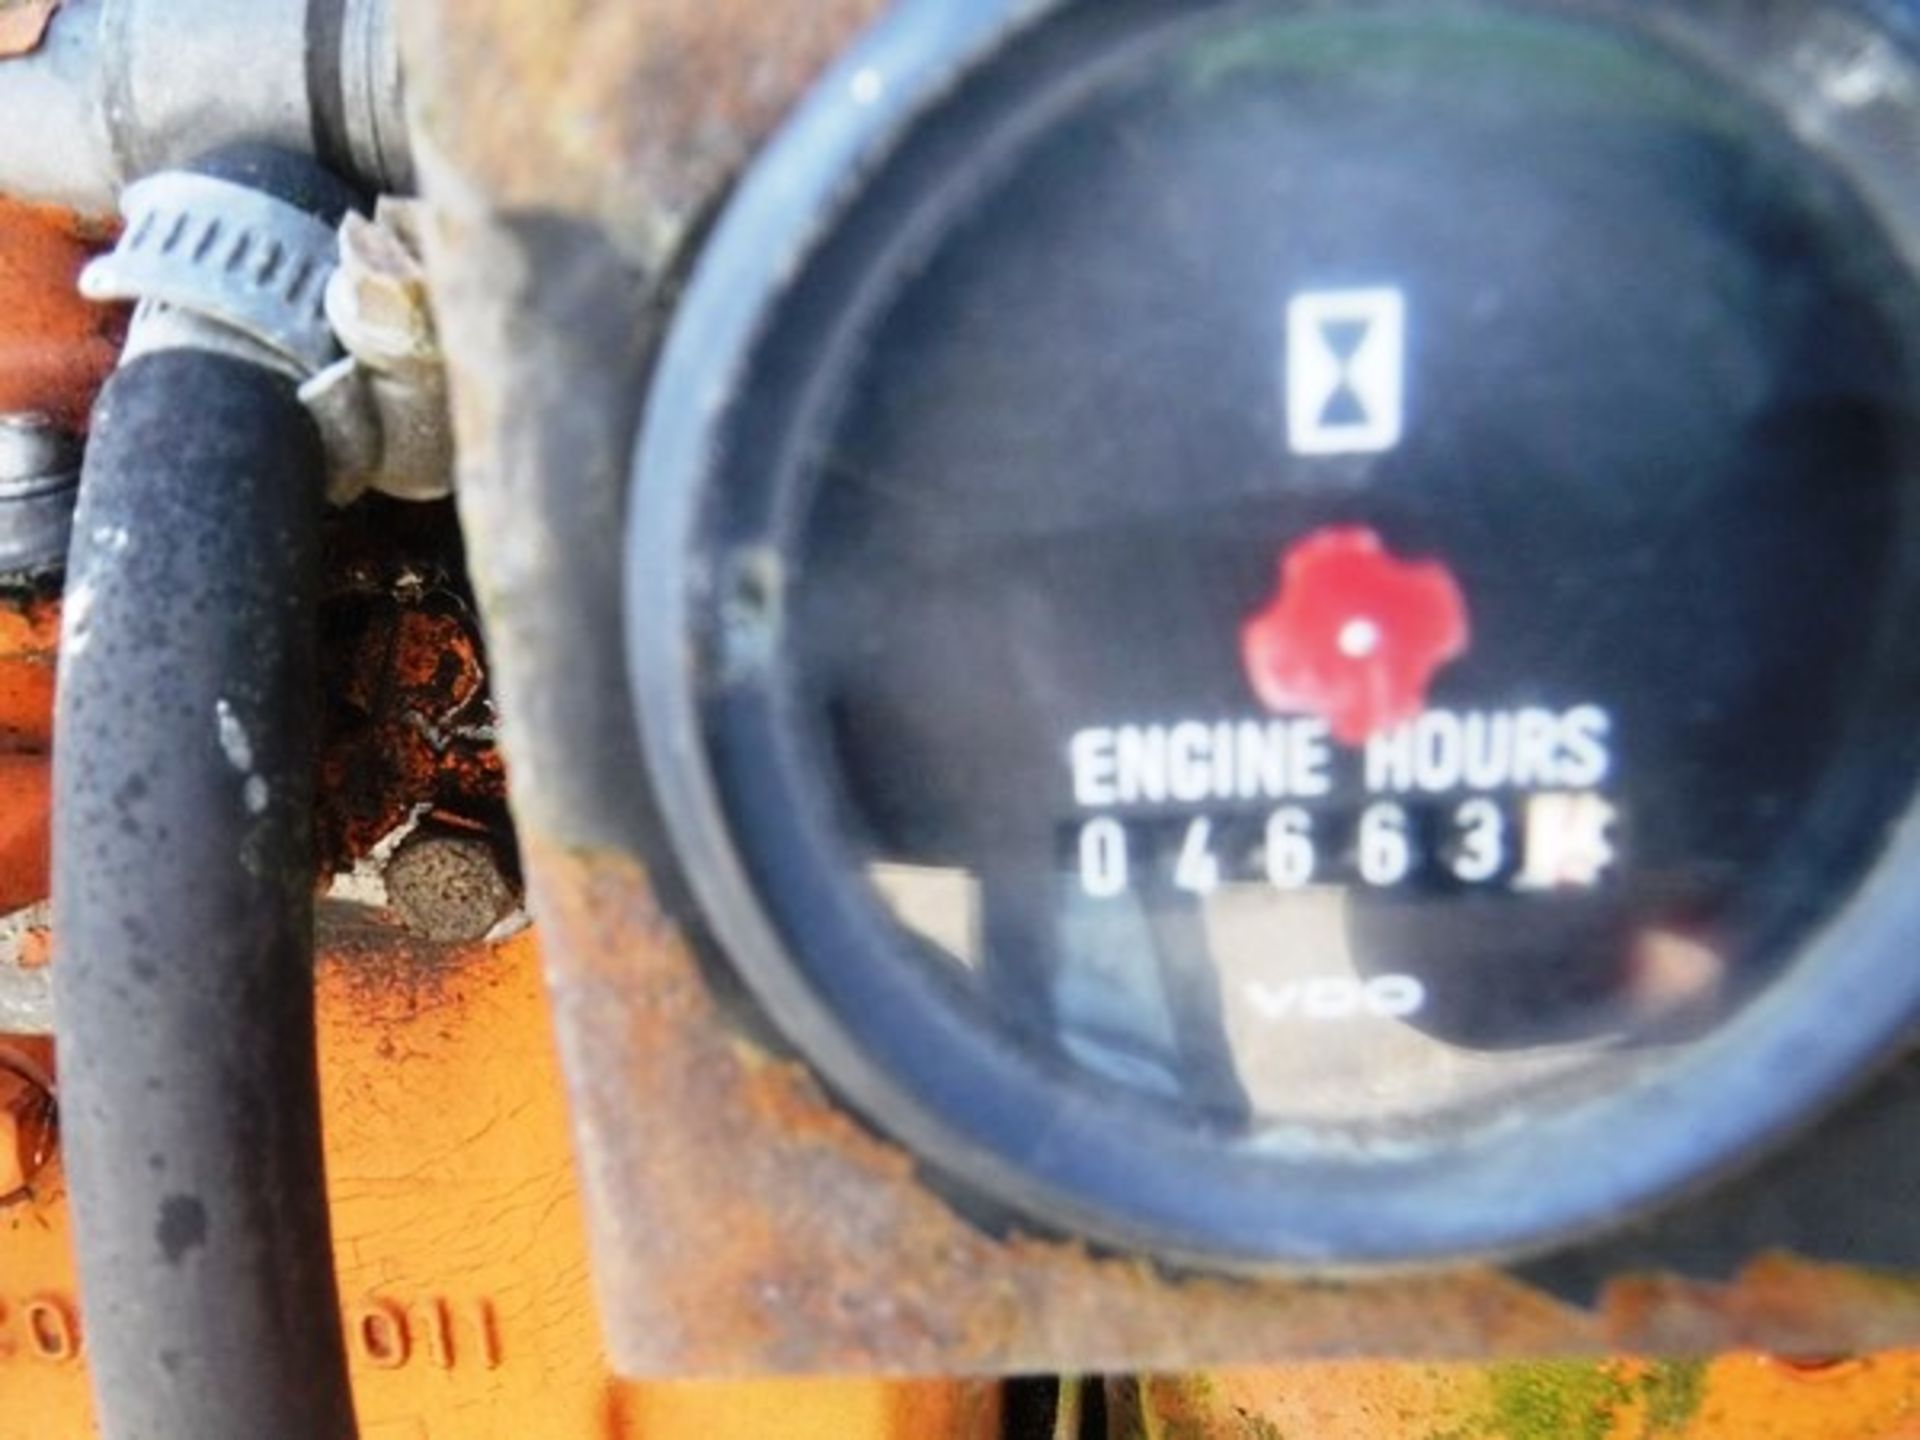 2001 GODWIN 0D100/TS2 engine driven water pump s/n S26597 fl no PO388. 4663 hrs (not verified) - Image 6 of 8